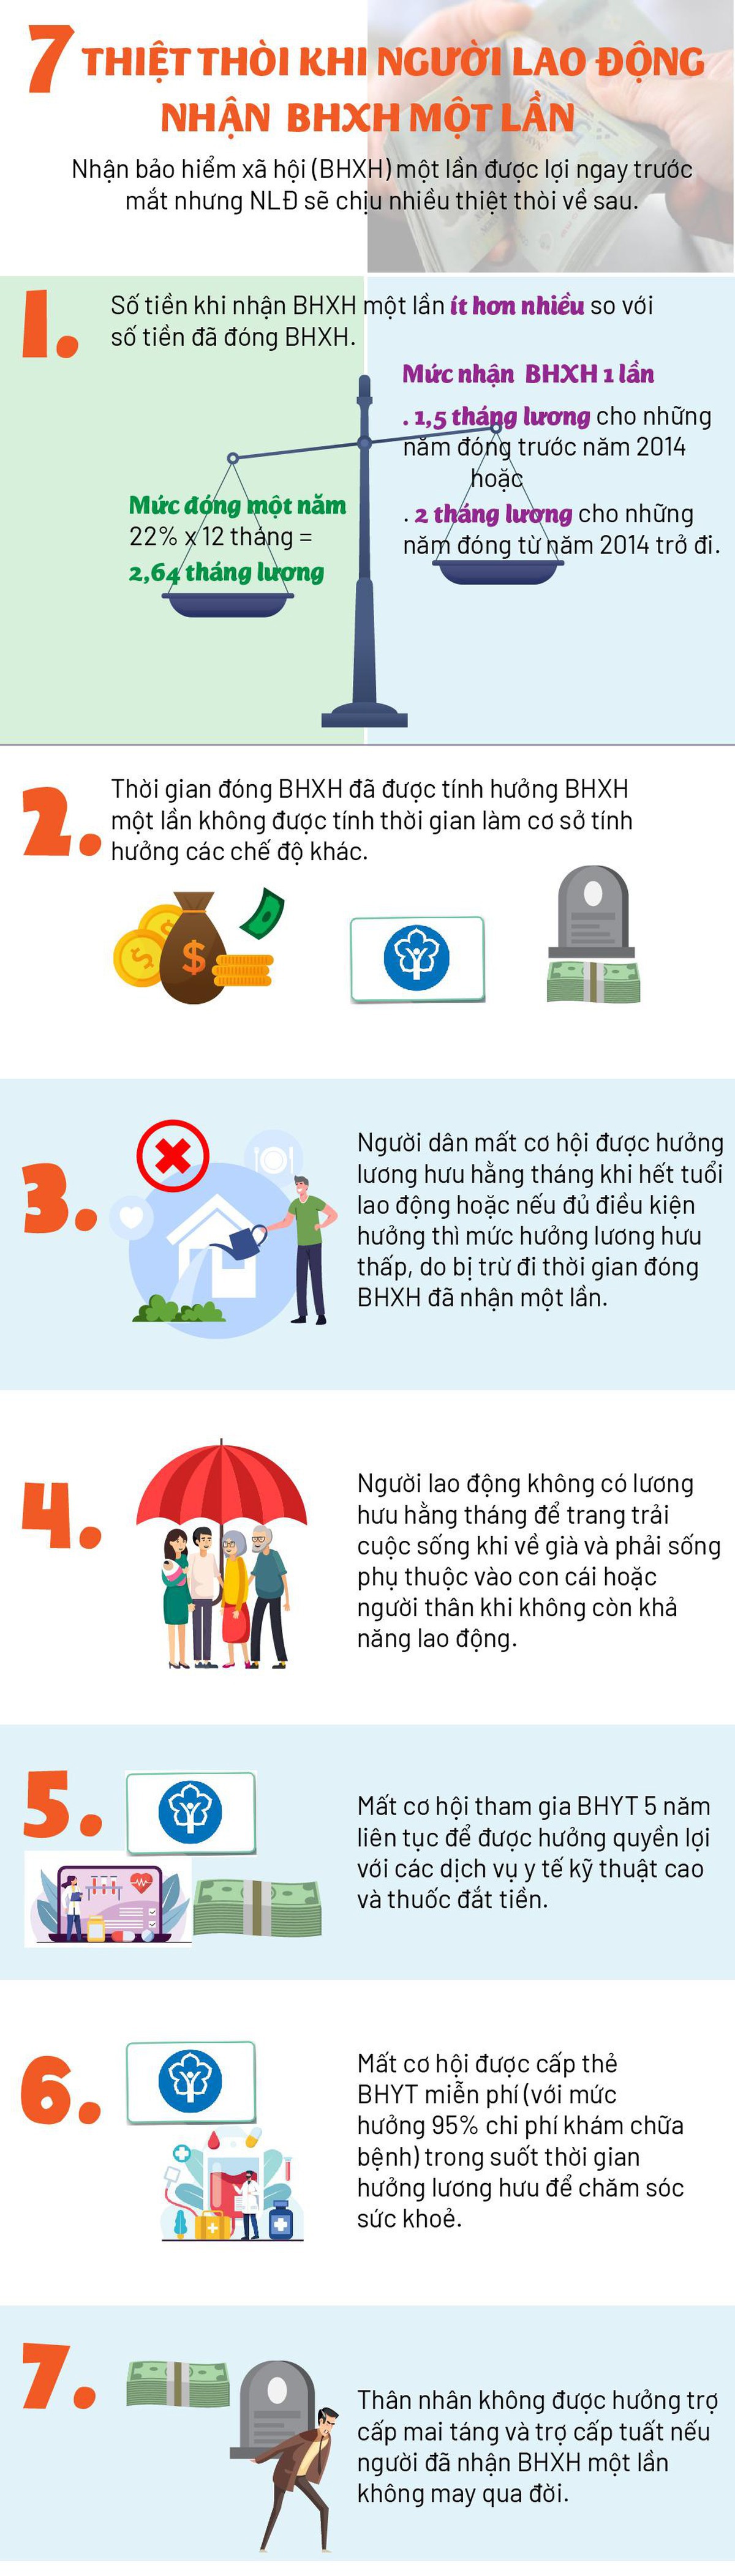 infographic-7-thiet-thoi-khi-nguoi-lao-dong-nhan-bhxh-1-lan-1650962100.jpg